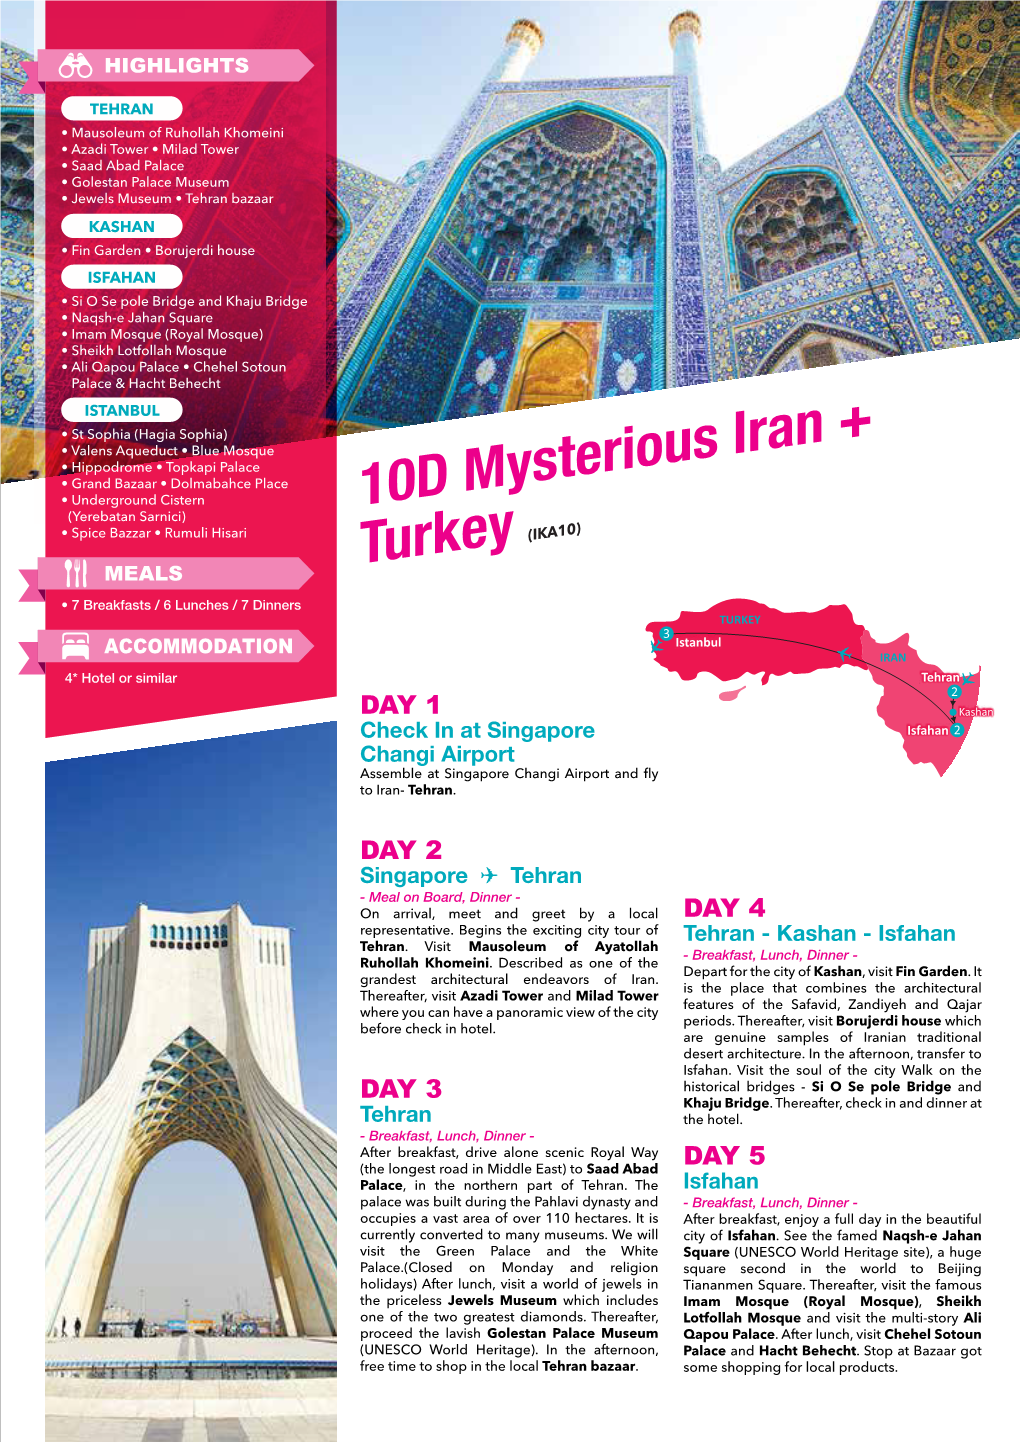 10D Mysterious Iran + Turkey